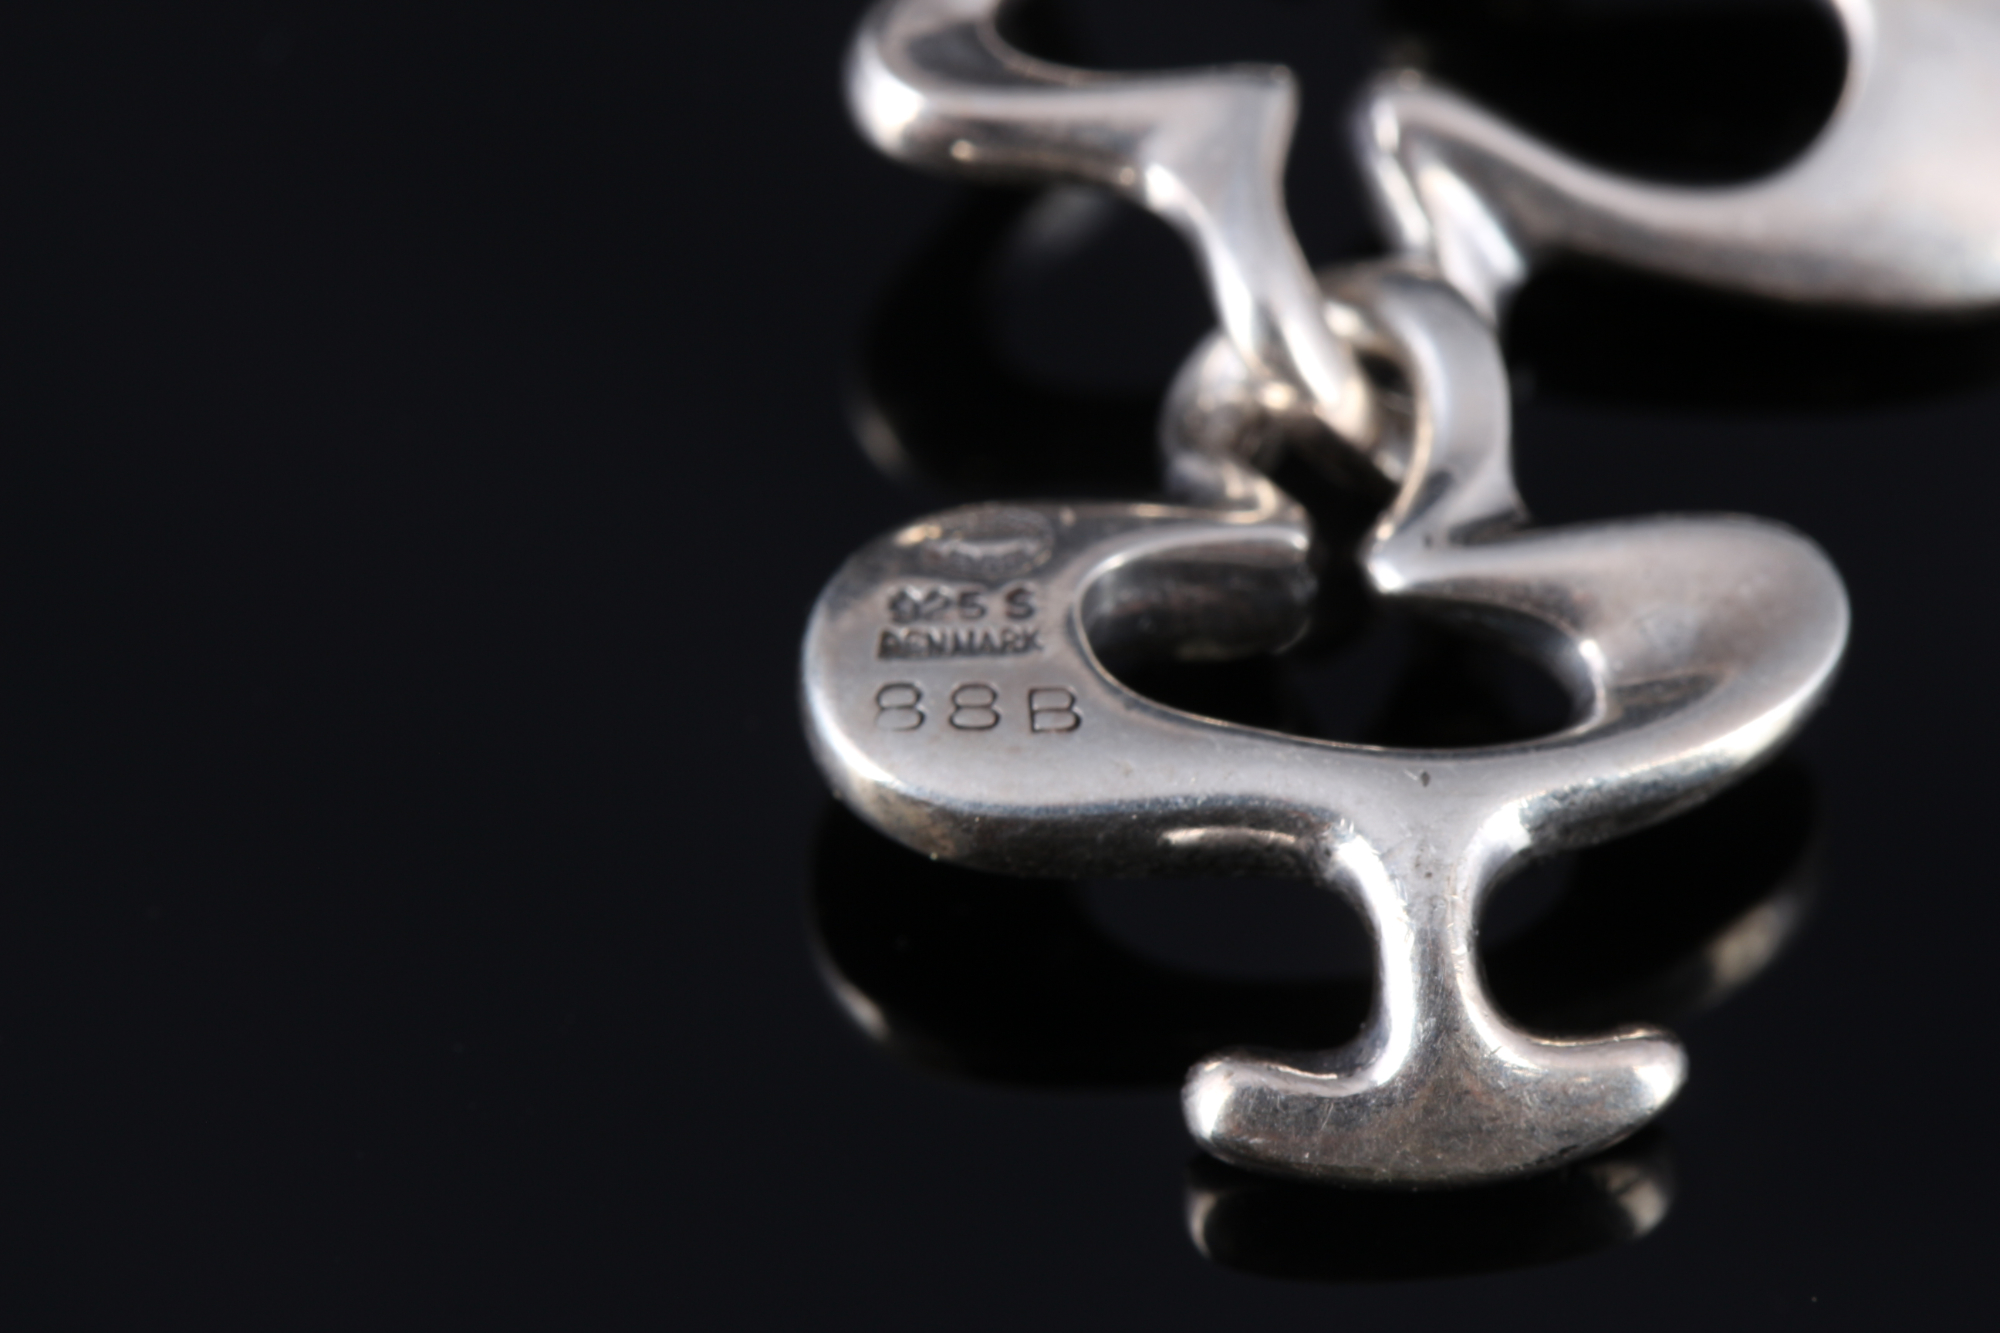 Georg Jensen Splash 925 Silber Armband No. 88B, sterling silver bracelet, - Image 4 of 4